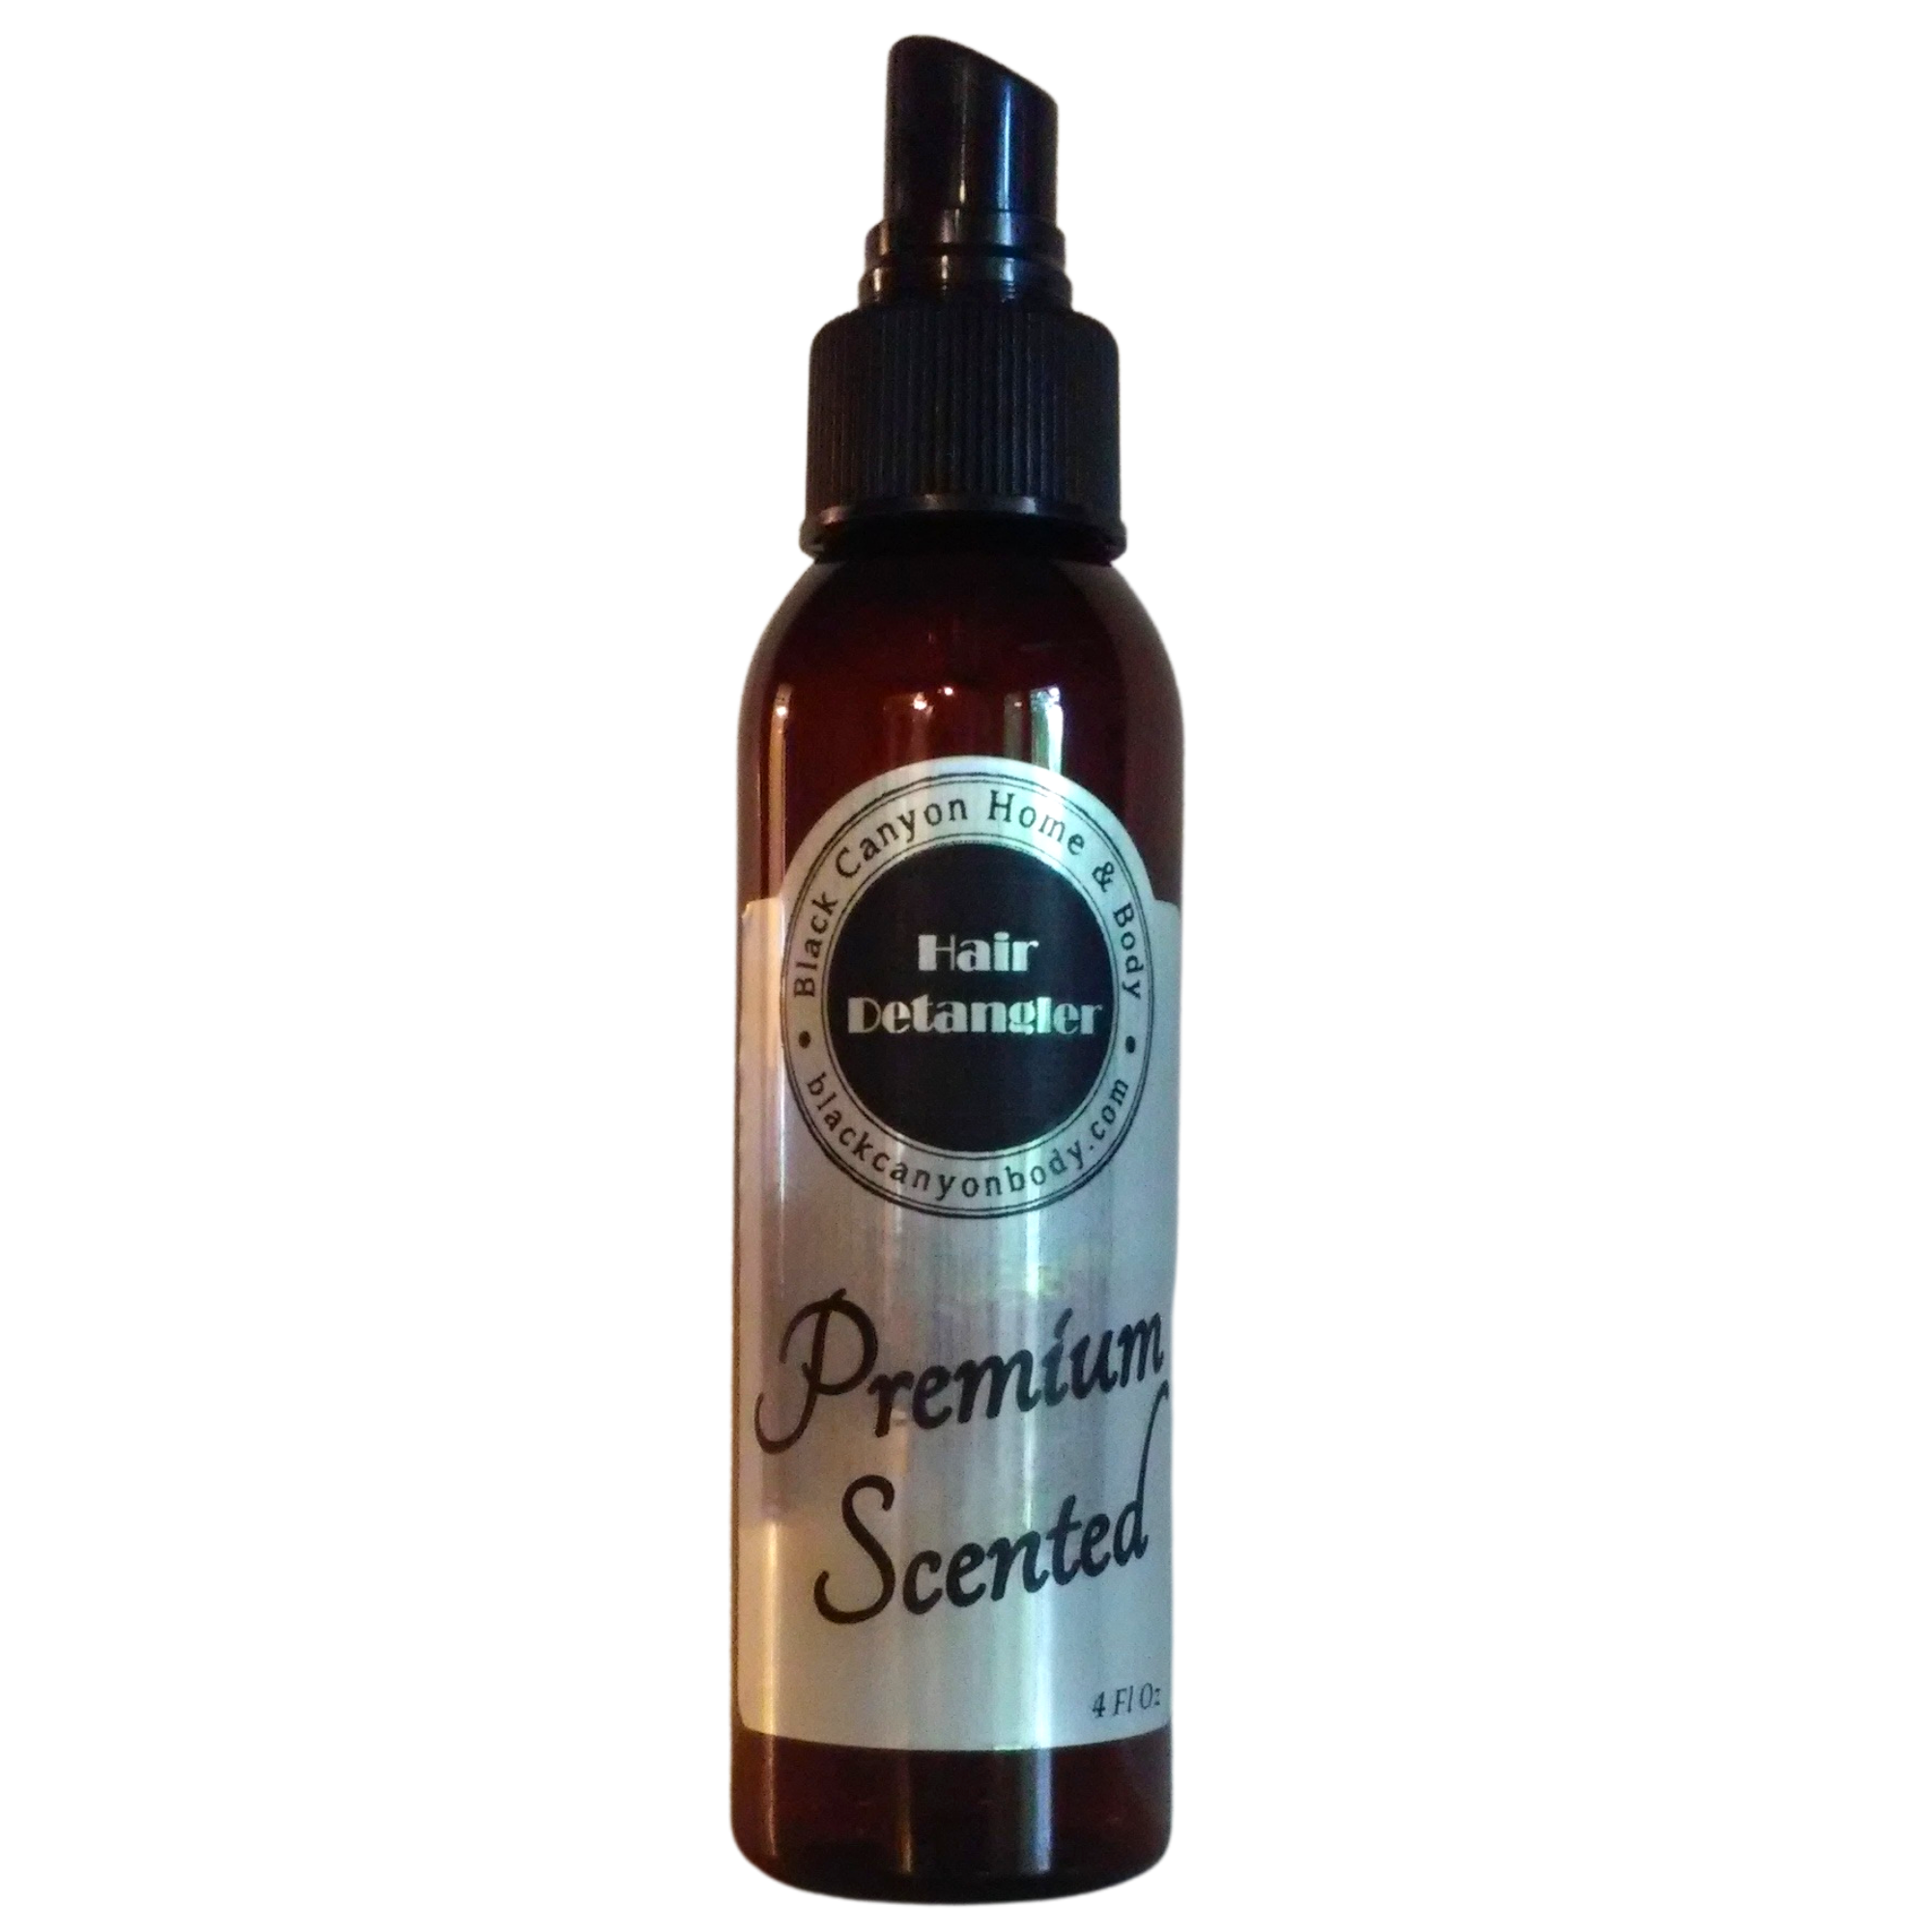 Paydens Cobalt Eucalyptus & Cedarwood Scented Hair Detangler Spray with Olive Oil For Men